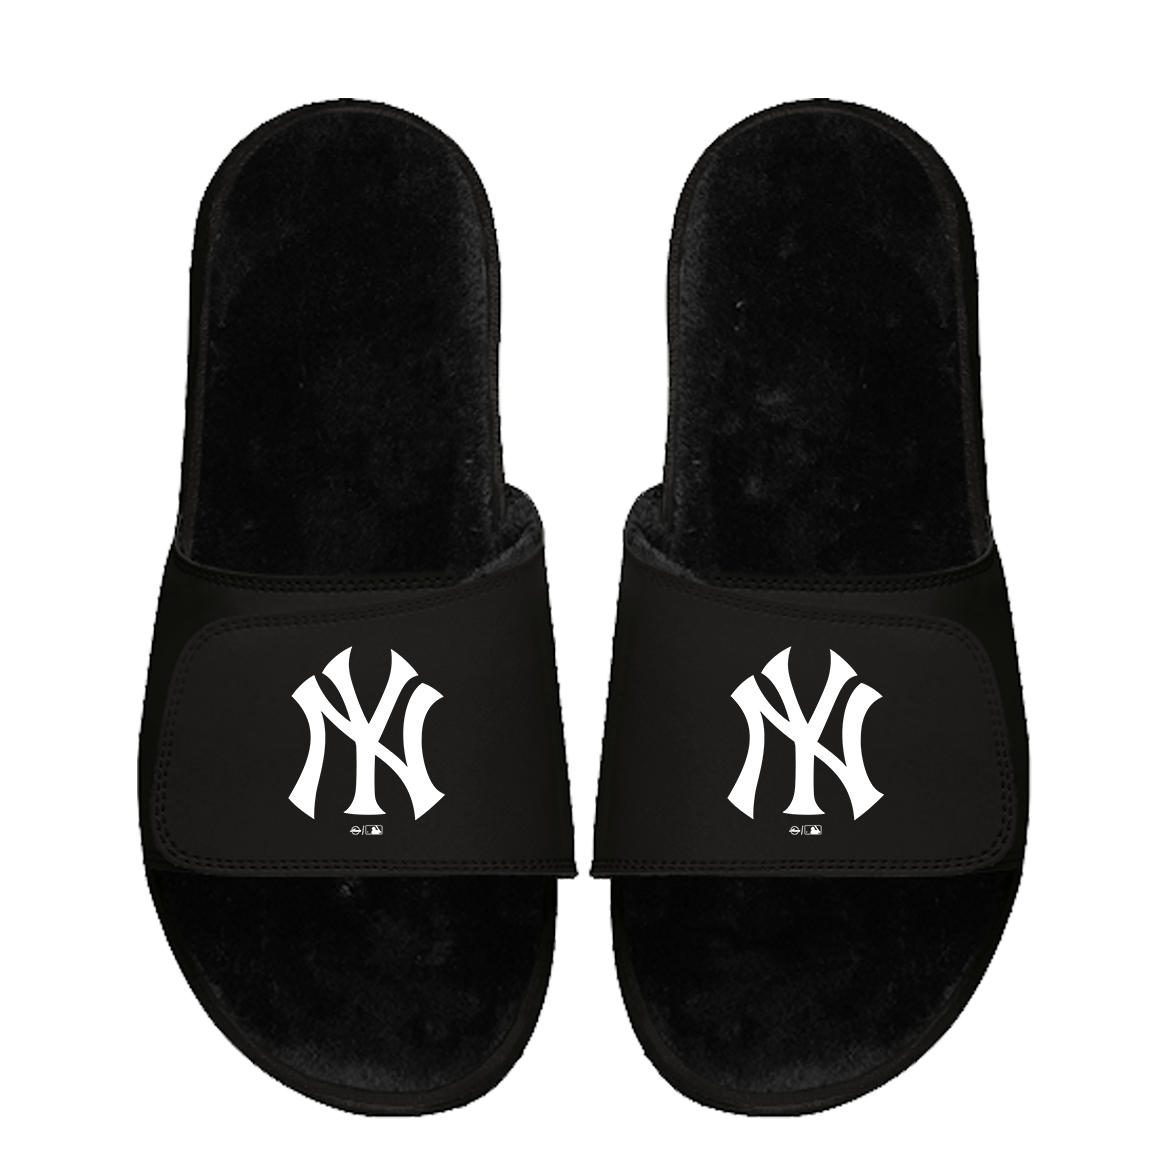 New York Yankees Primary Black Fur